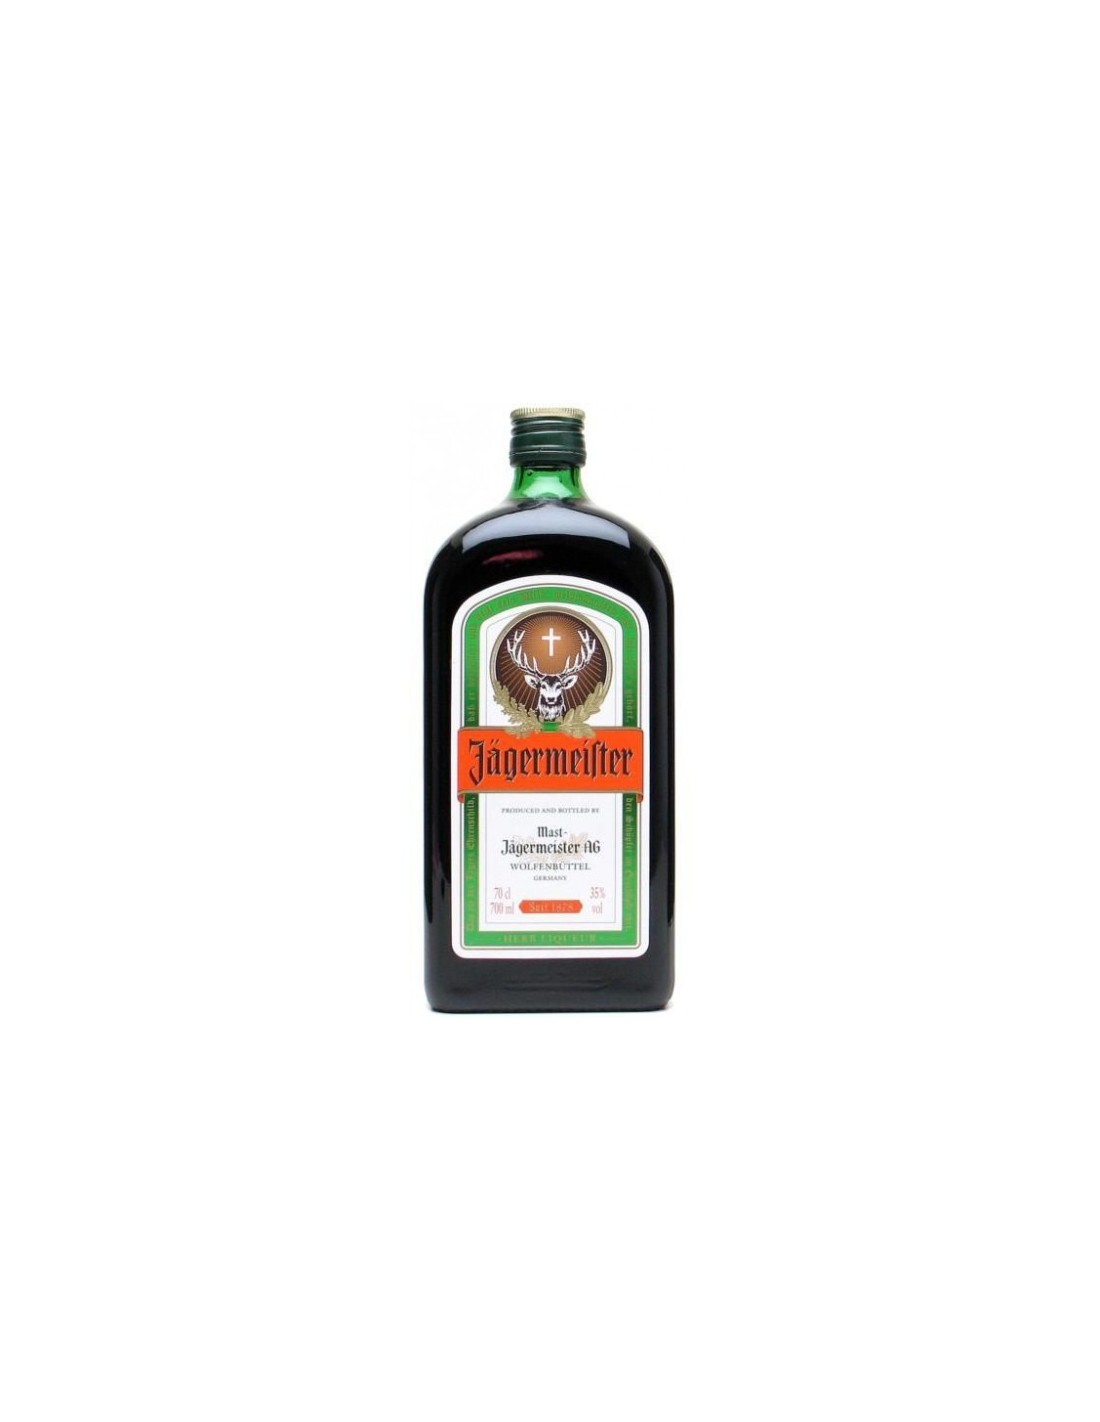 Lichior digestiv Jagermeister, 35% alc., 0.7L, Germania alcooldiscount.ro